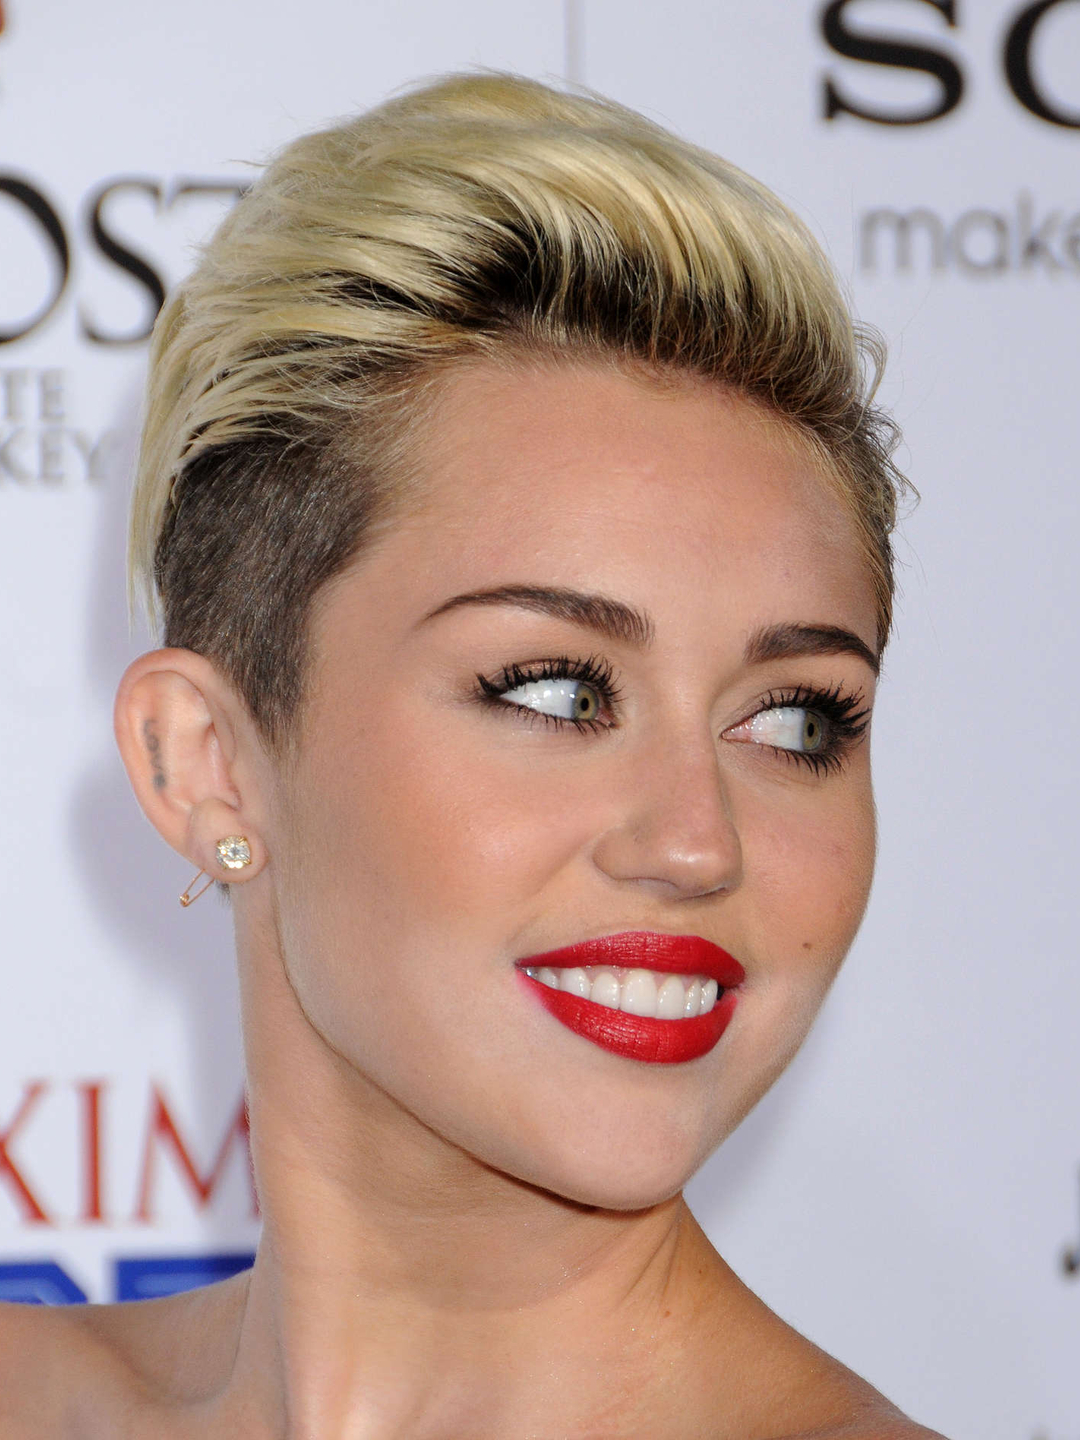 Miley Cyrus ethnicity